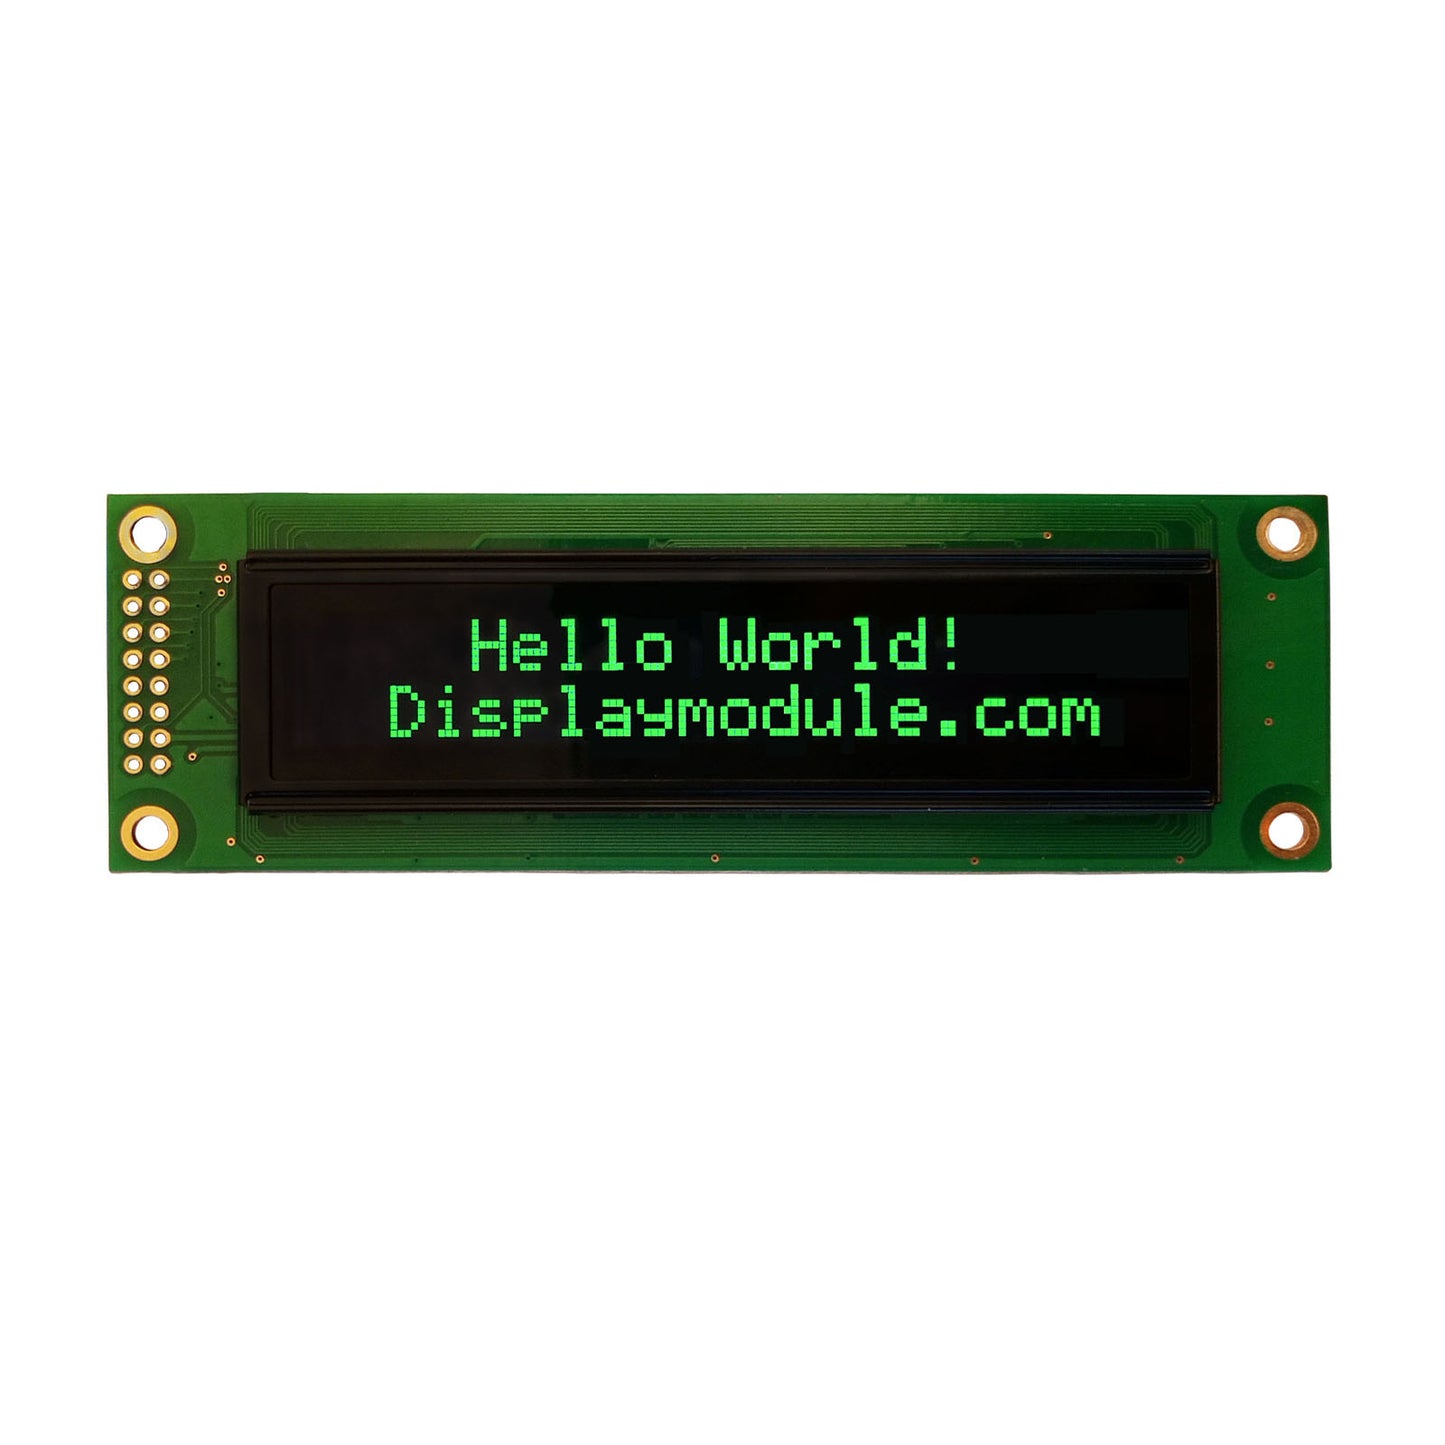 DisplayModule 20x2 Monochrome Character OLED - MCU, SPI, I2C